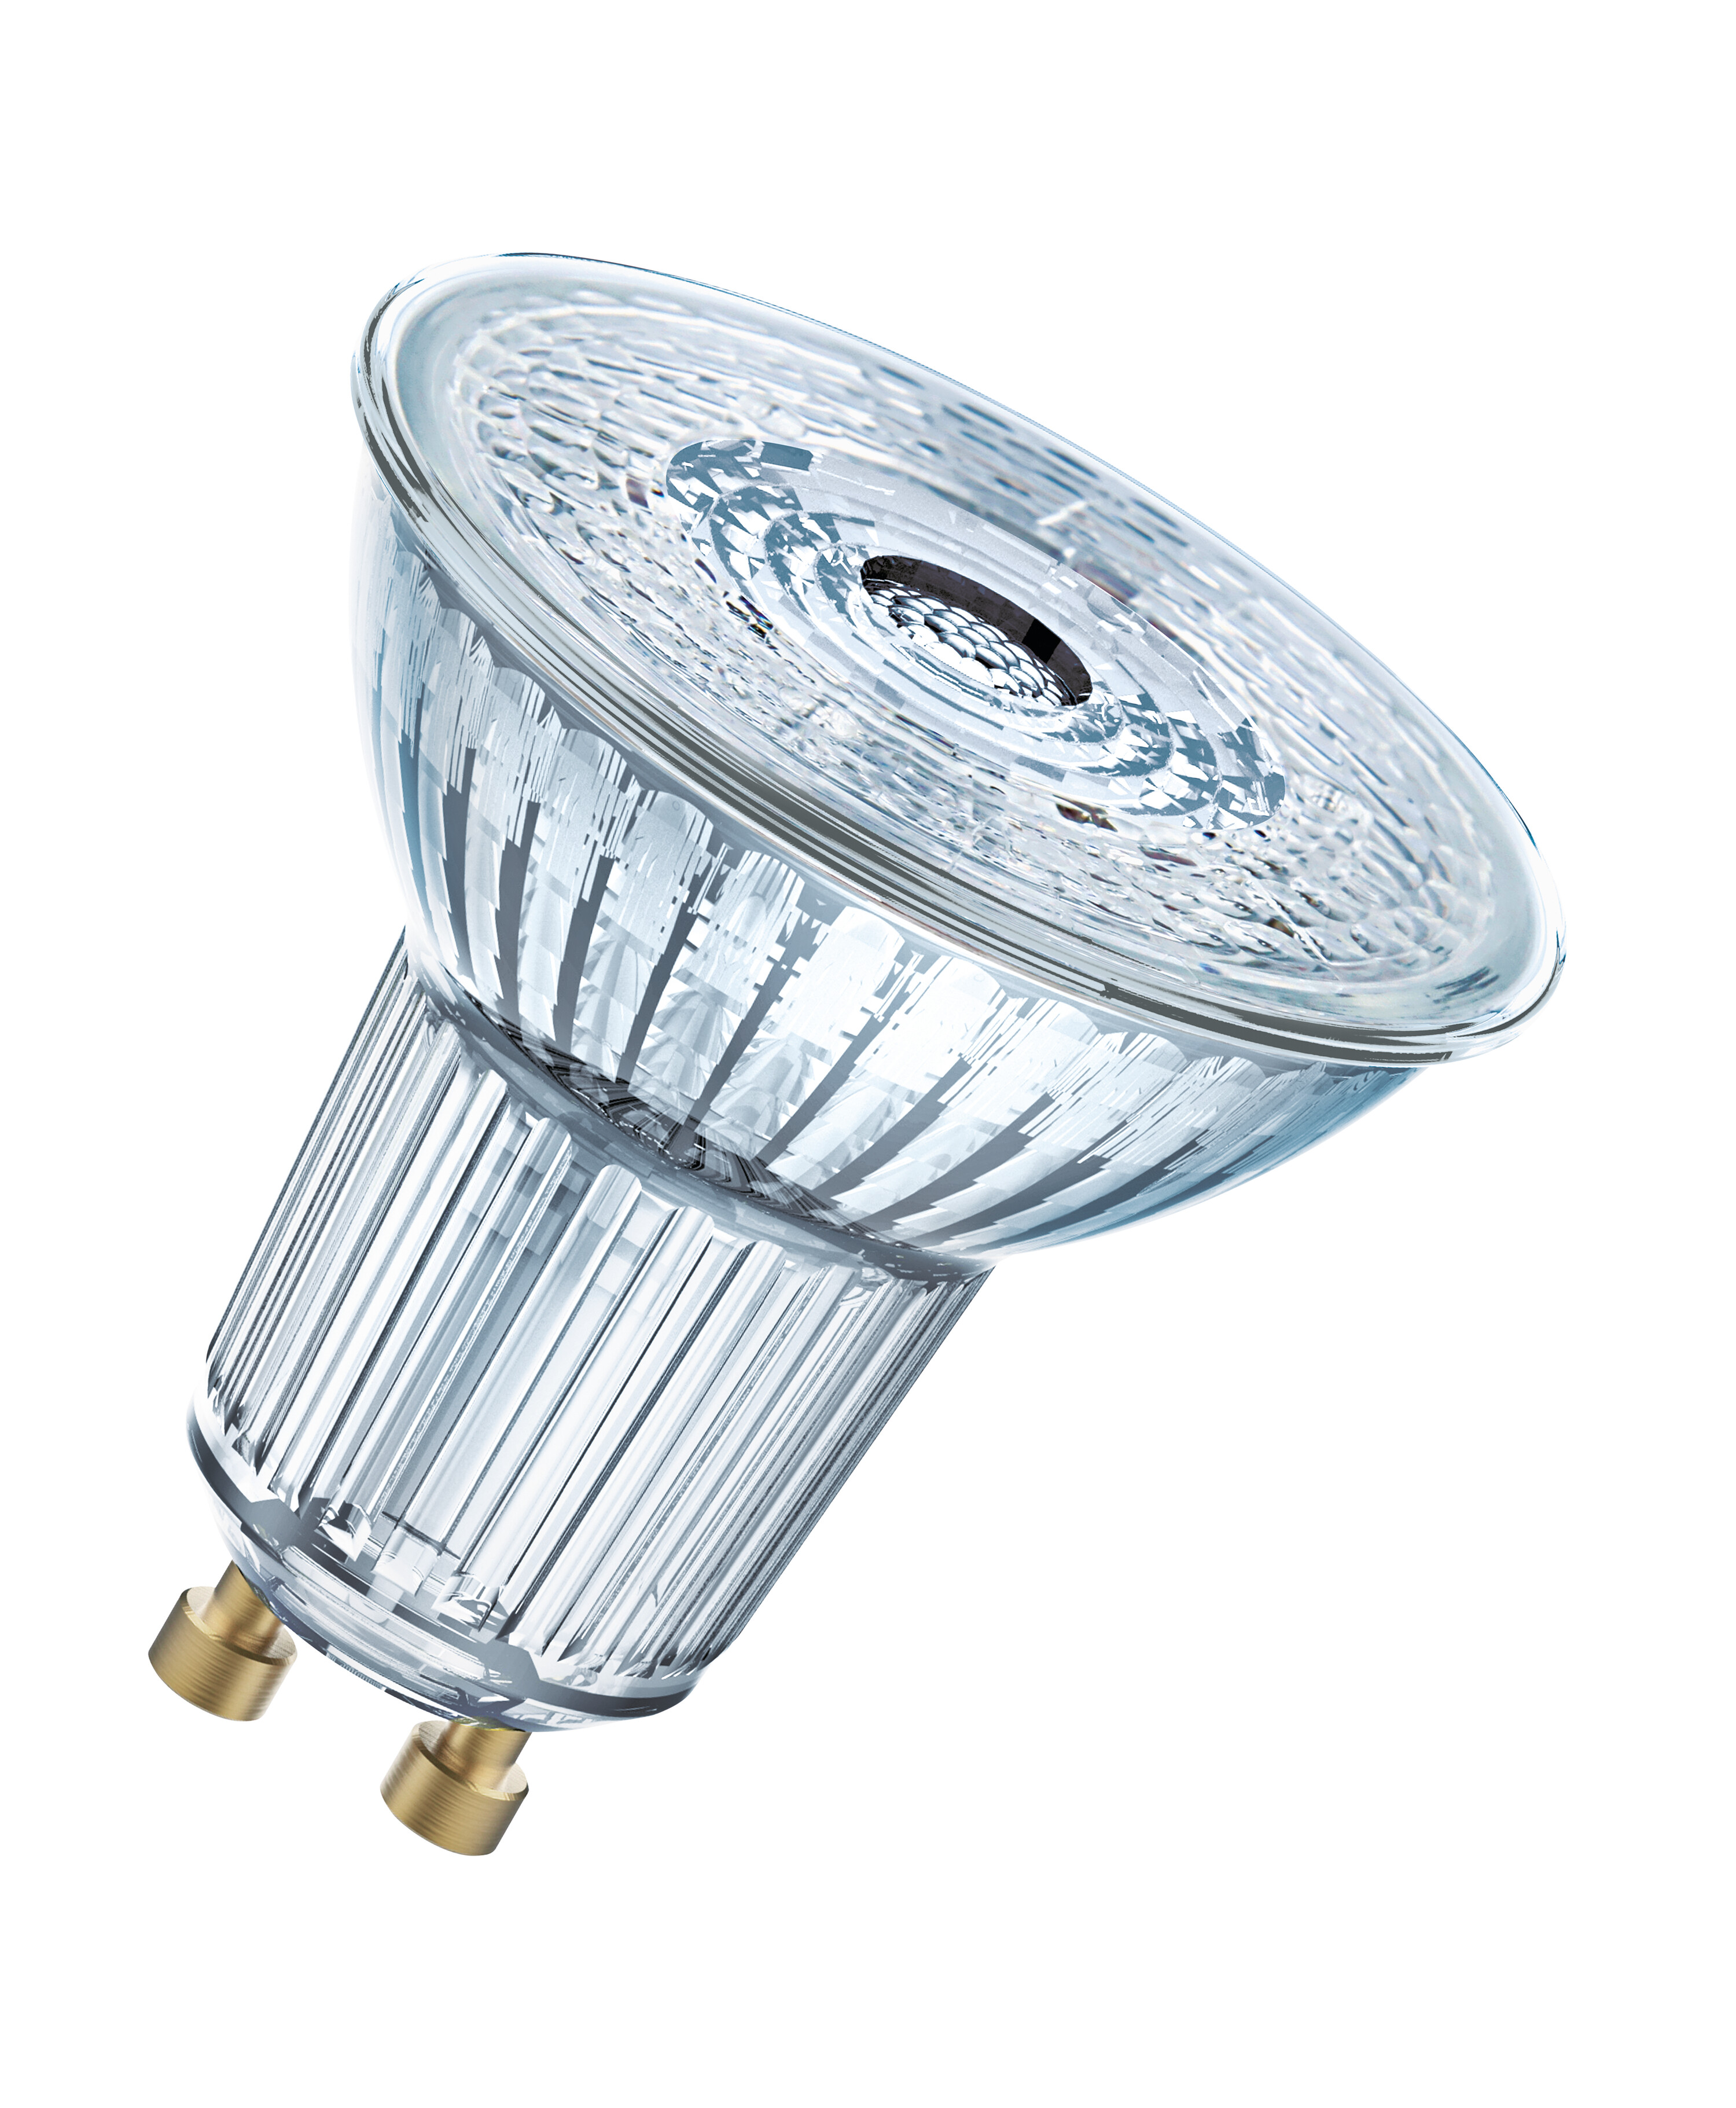 Warmweiß PAR16 Lampe LED SUPERSTAR LED Lumen OSRAM  230